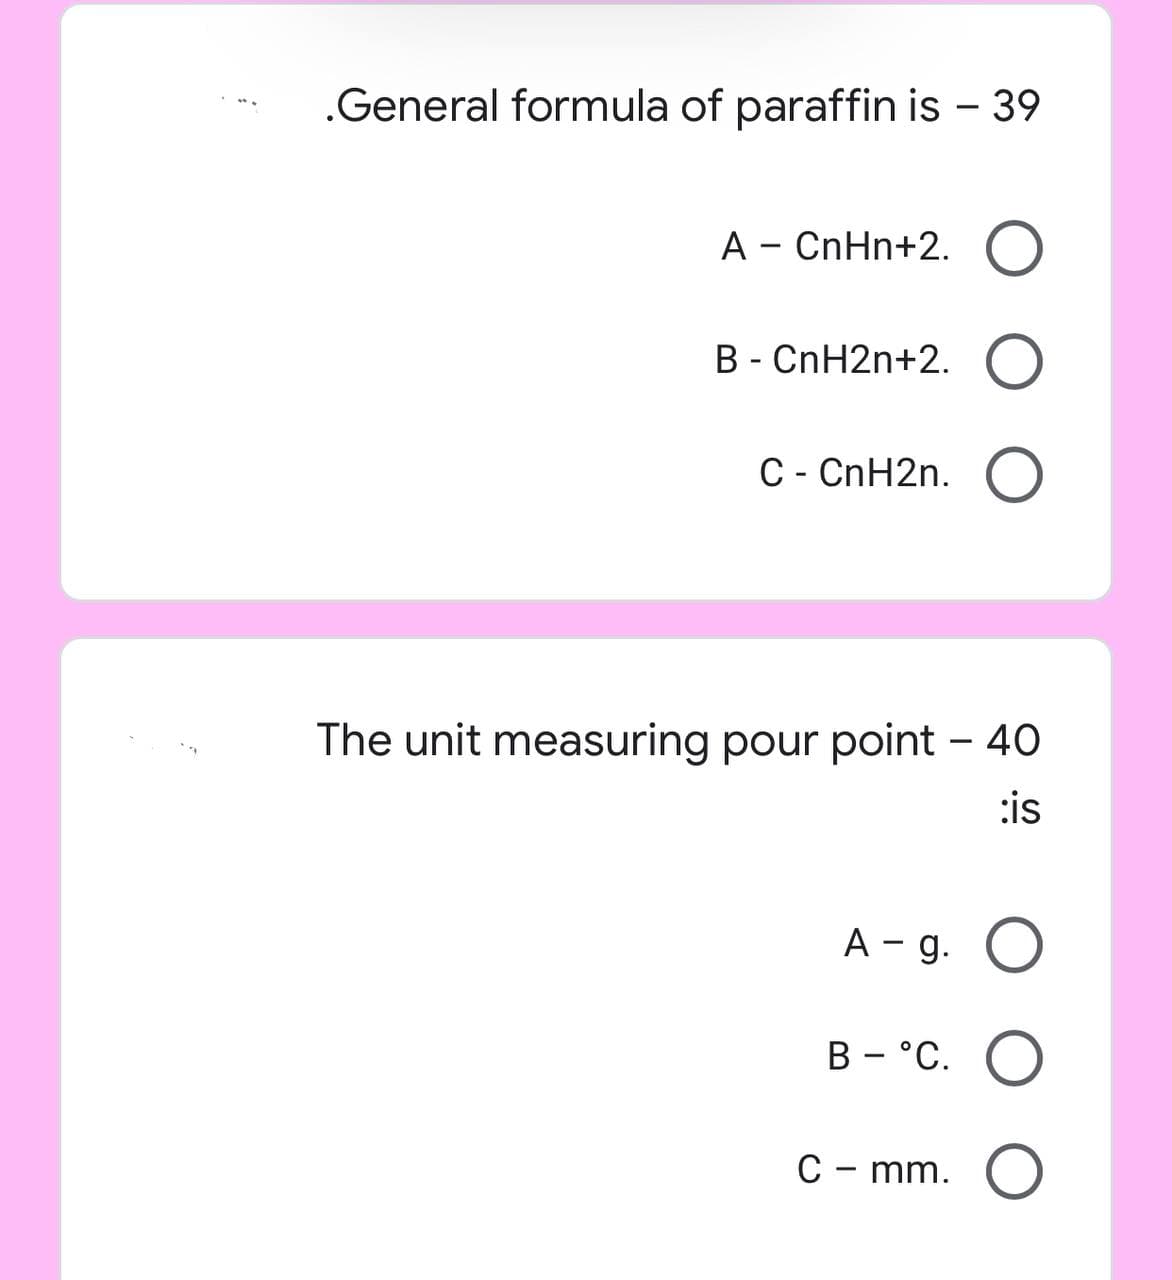 .General formula of paraffin is - 39
A - CnHn+2. O
B - CnH2n+2. O
C - CnH2n. O
The unit measuring pour point - 40
:is
A-g. O
B °C. O
O
C - mm.